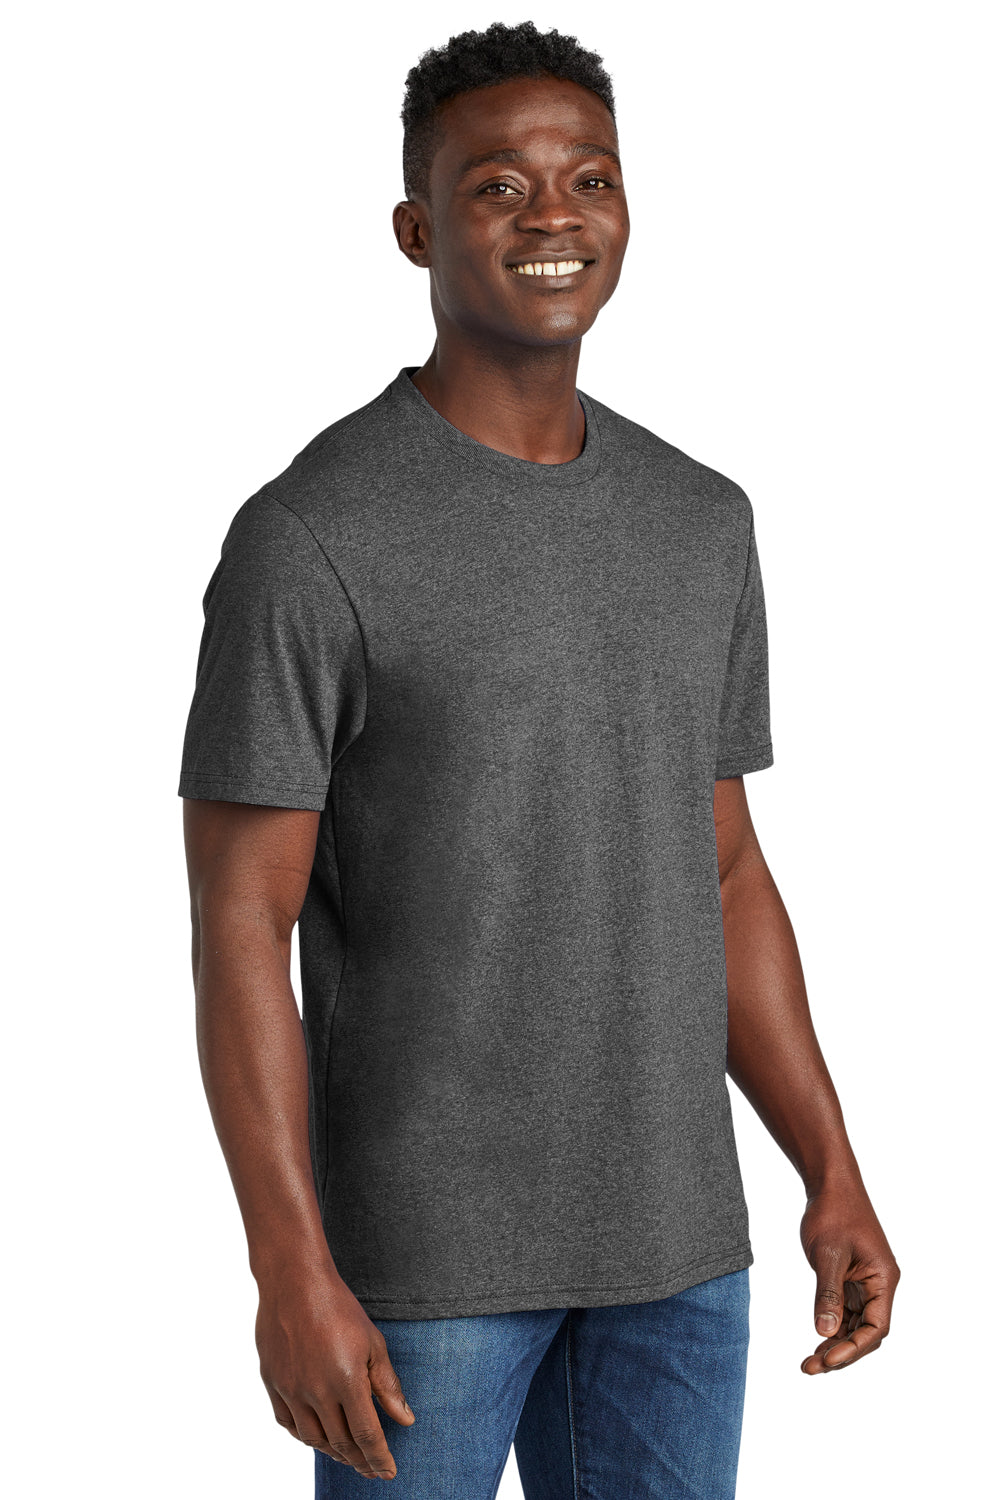 Allmade AL2300 Mens Recycled Short Sleeve Crewneck T-Shirt Heather Charcoal Grey Model 3Q